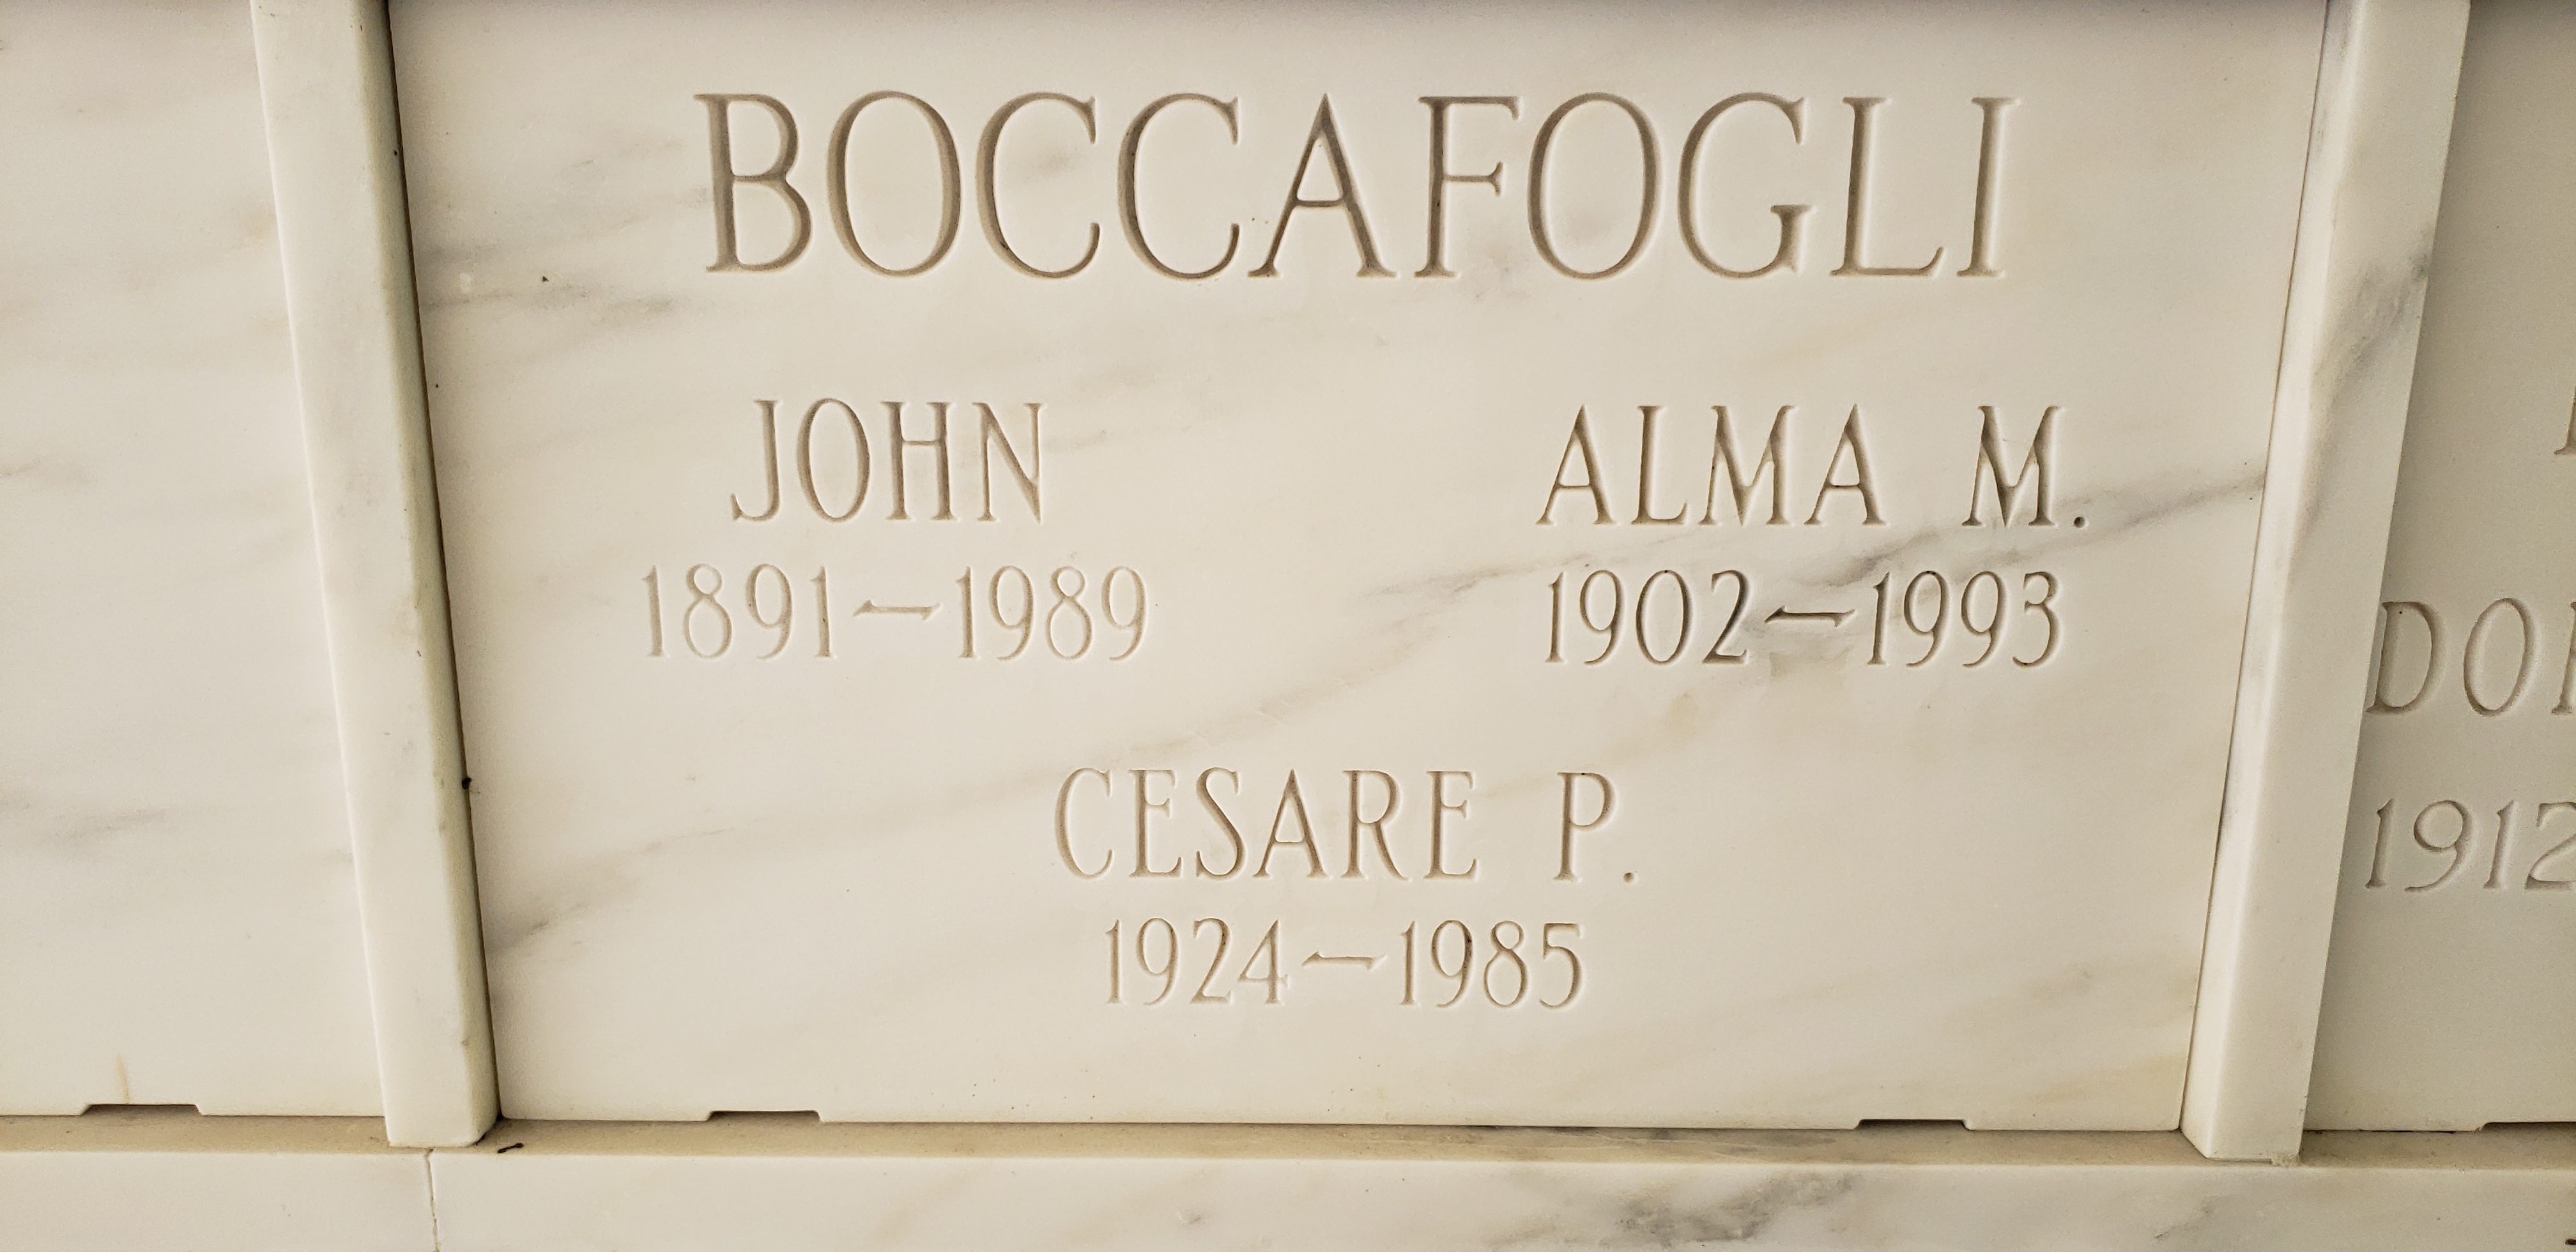 John Boccafogli